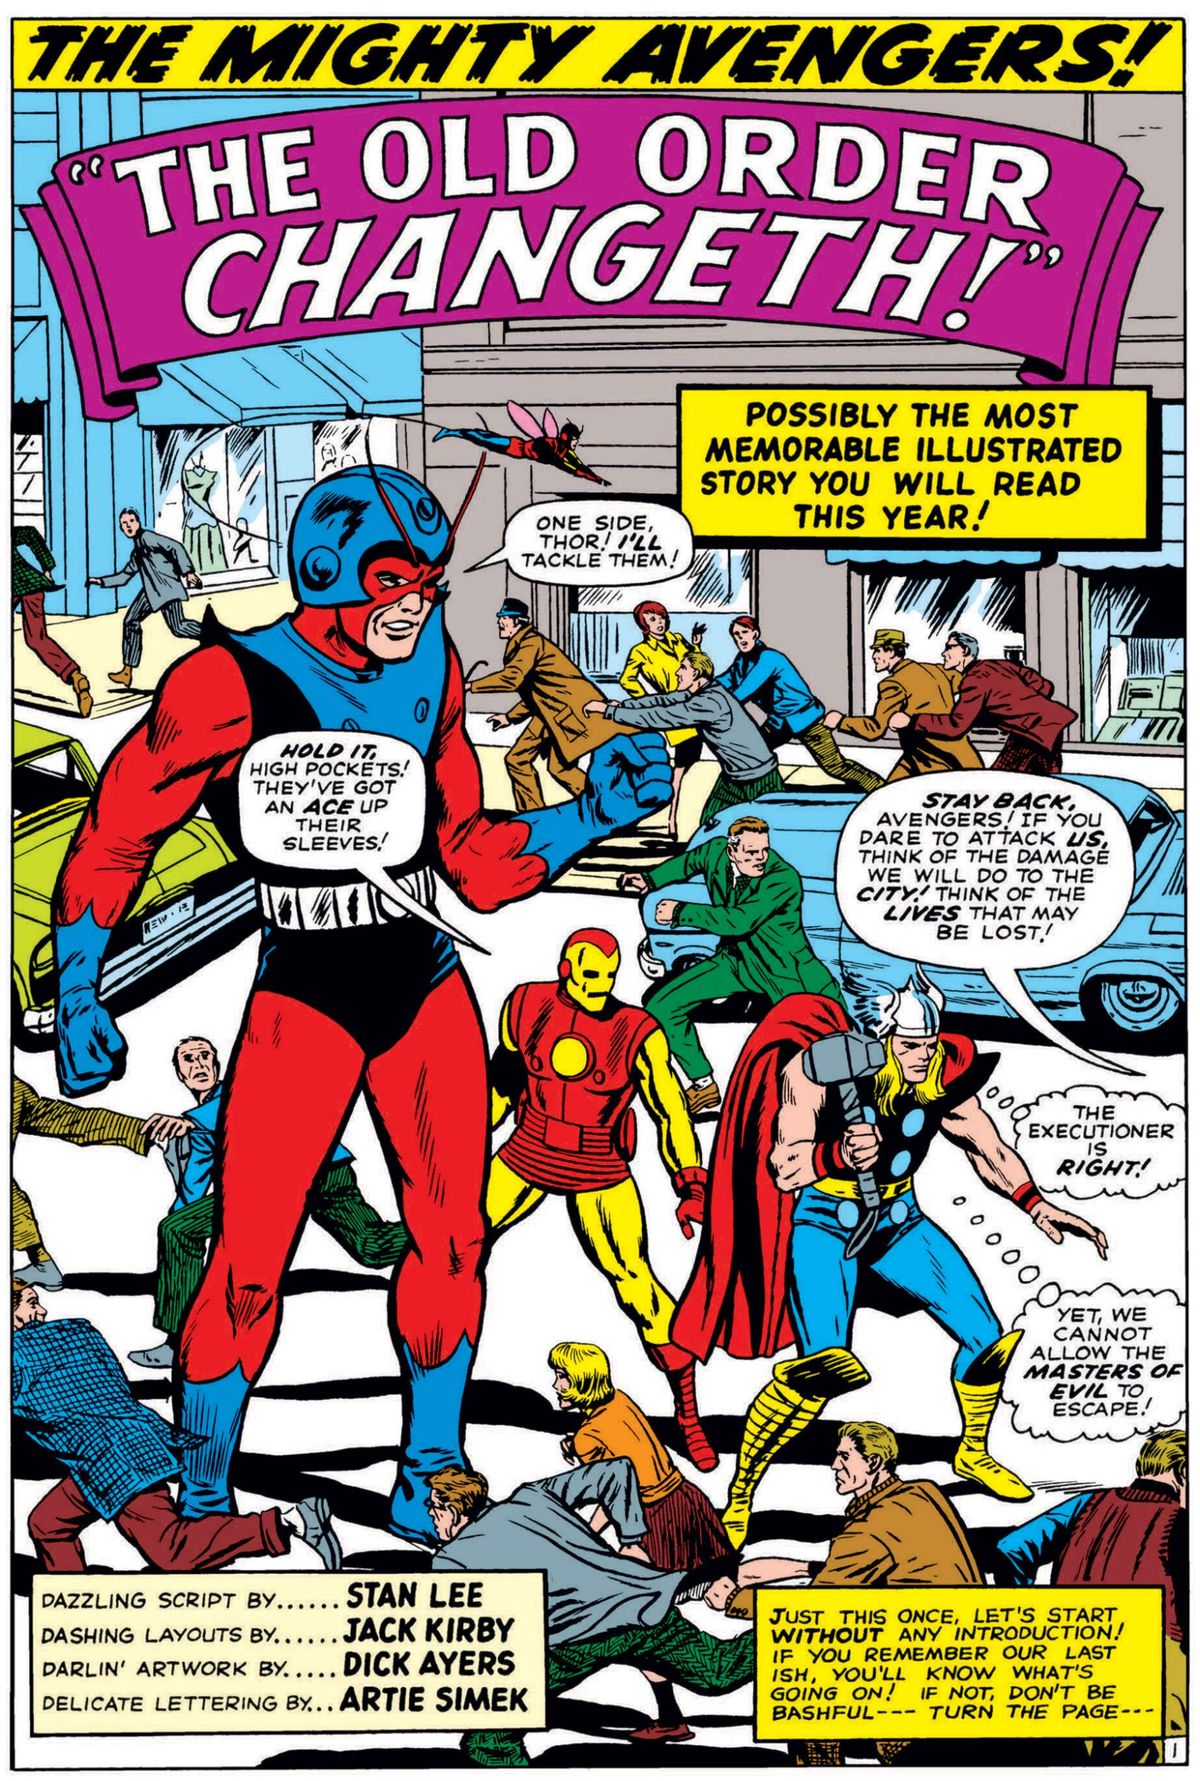 Marvel Week, Toronto Raptors, Avengers #16